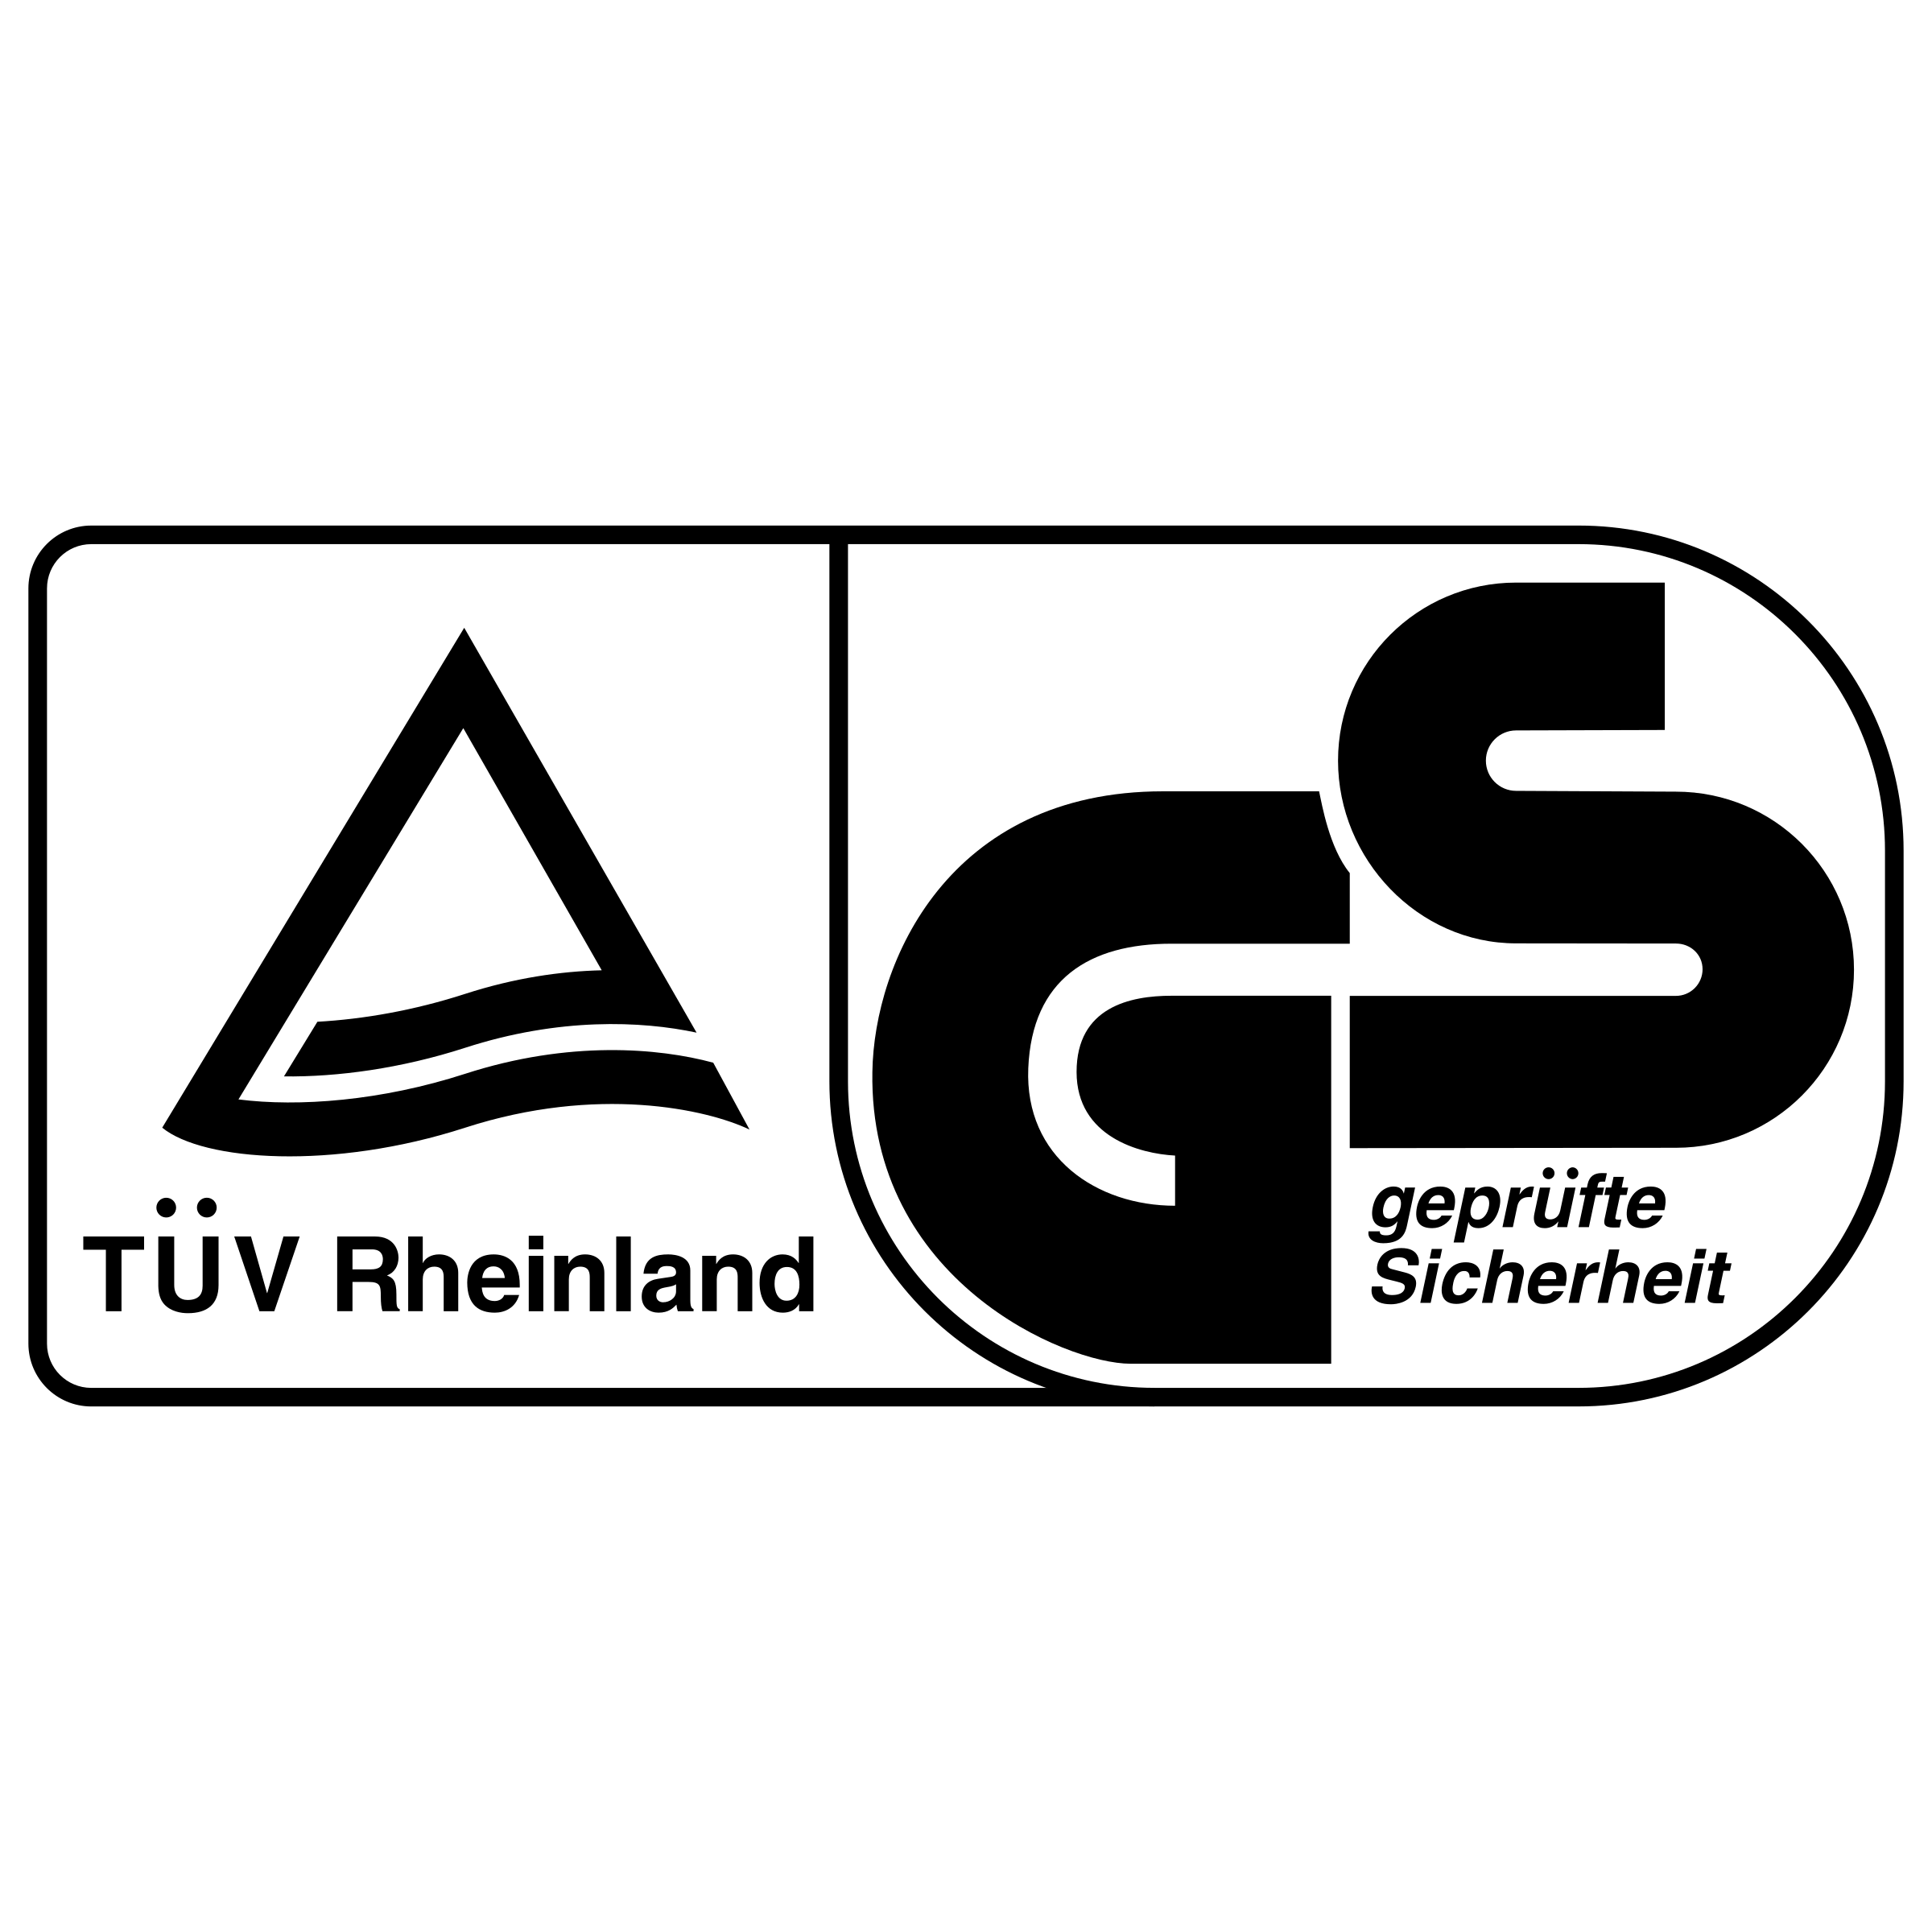 Tuv Logo - TUV Logo PNG Transparent & SVG Vector - Freebie Supply